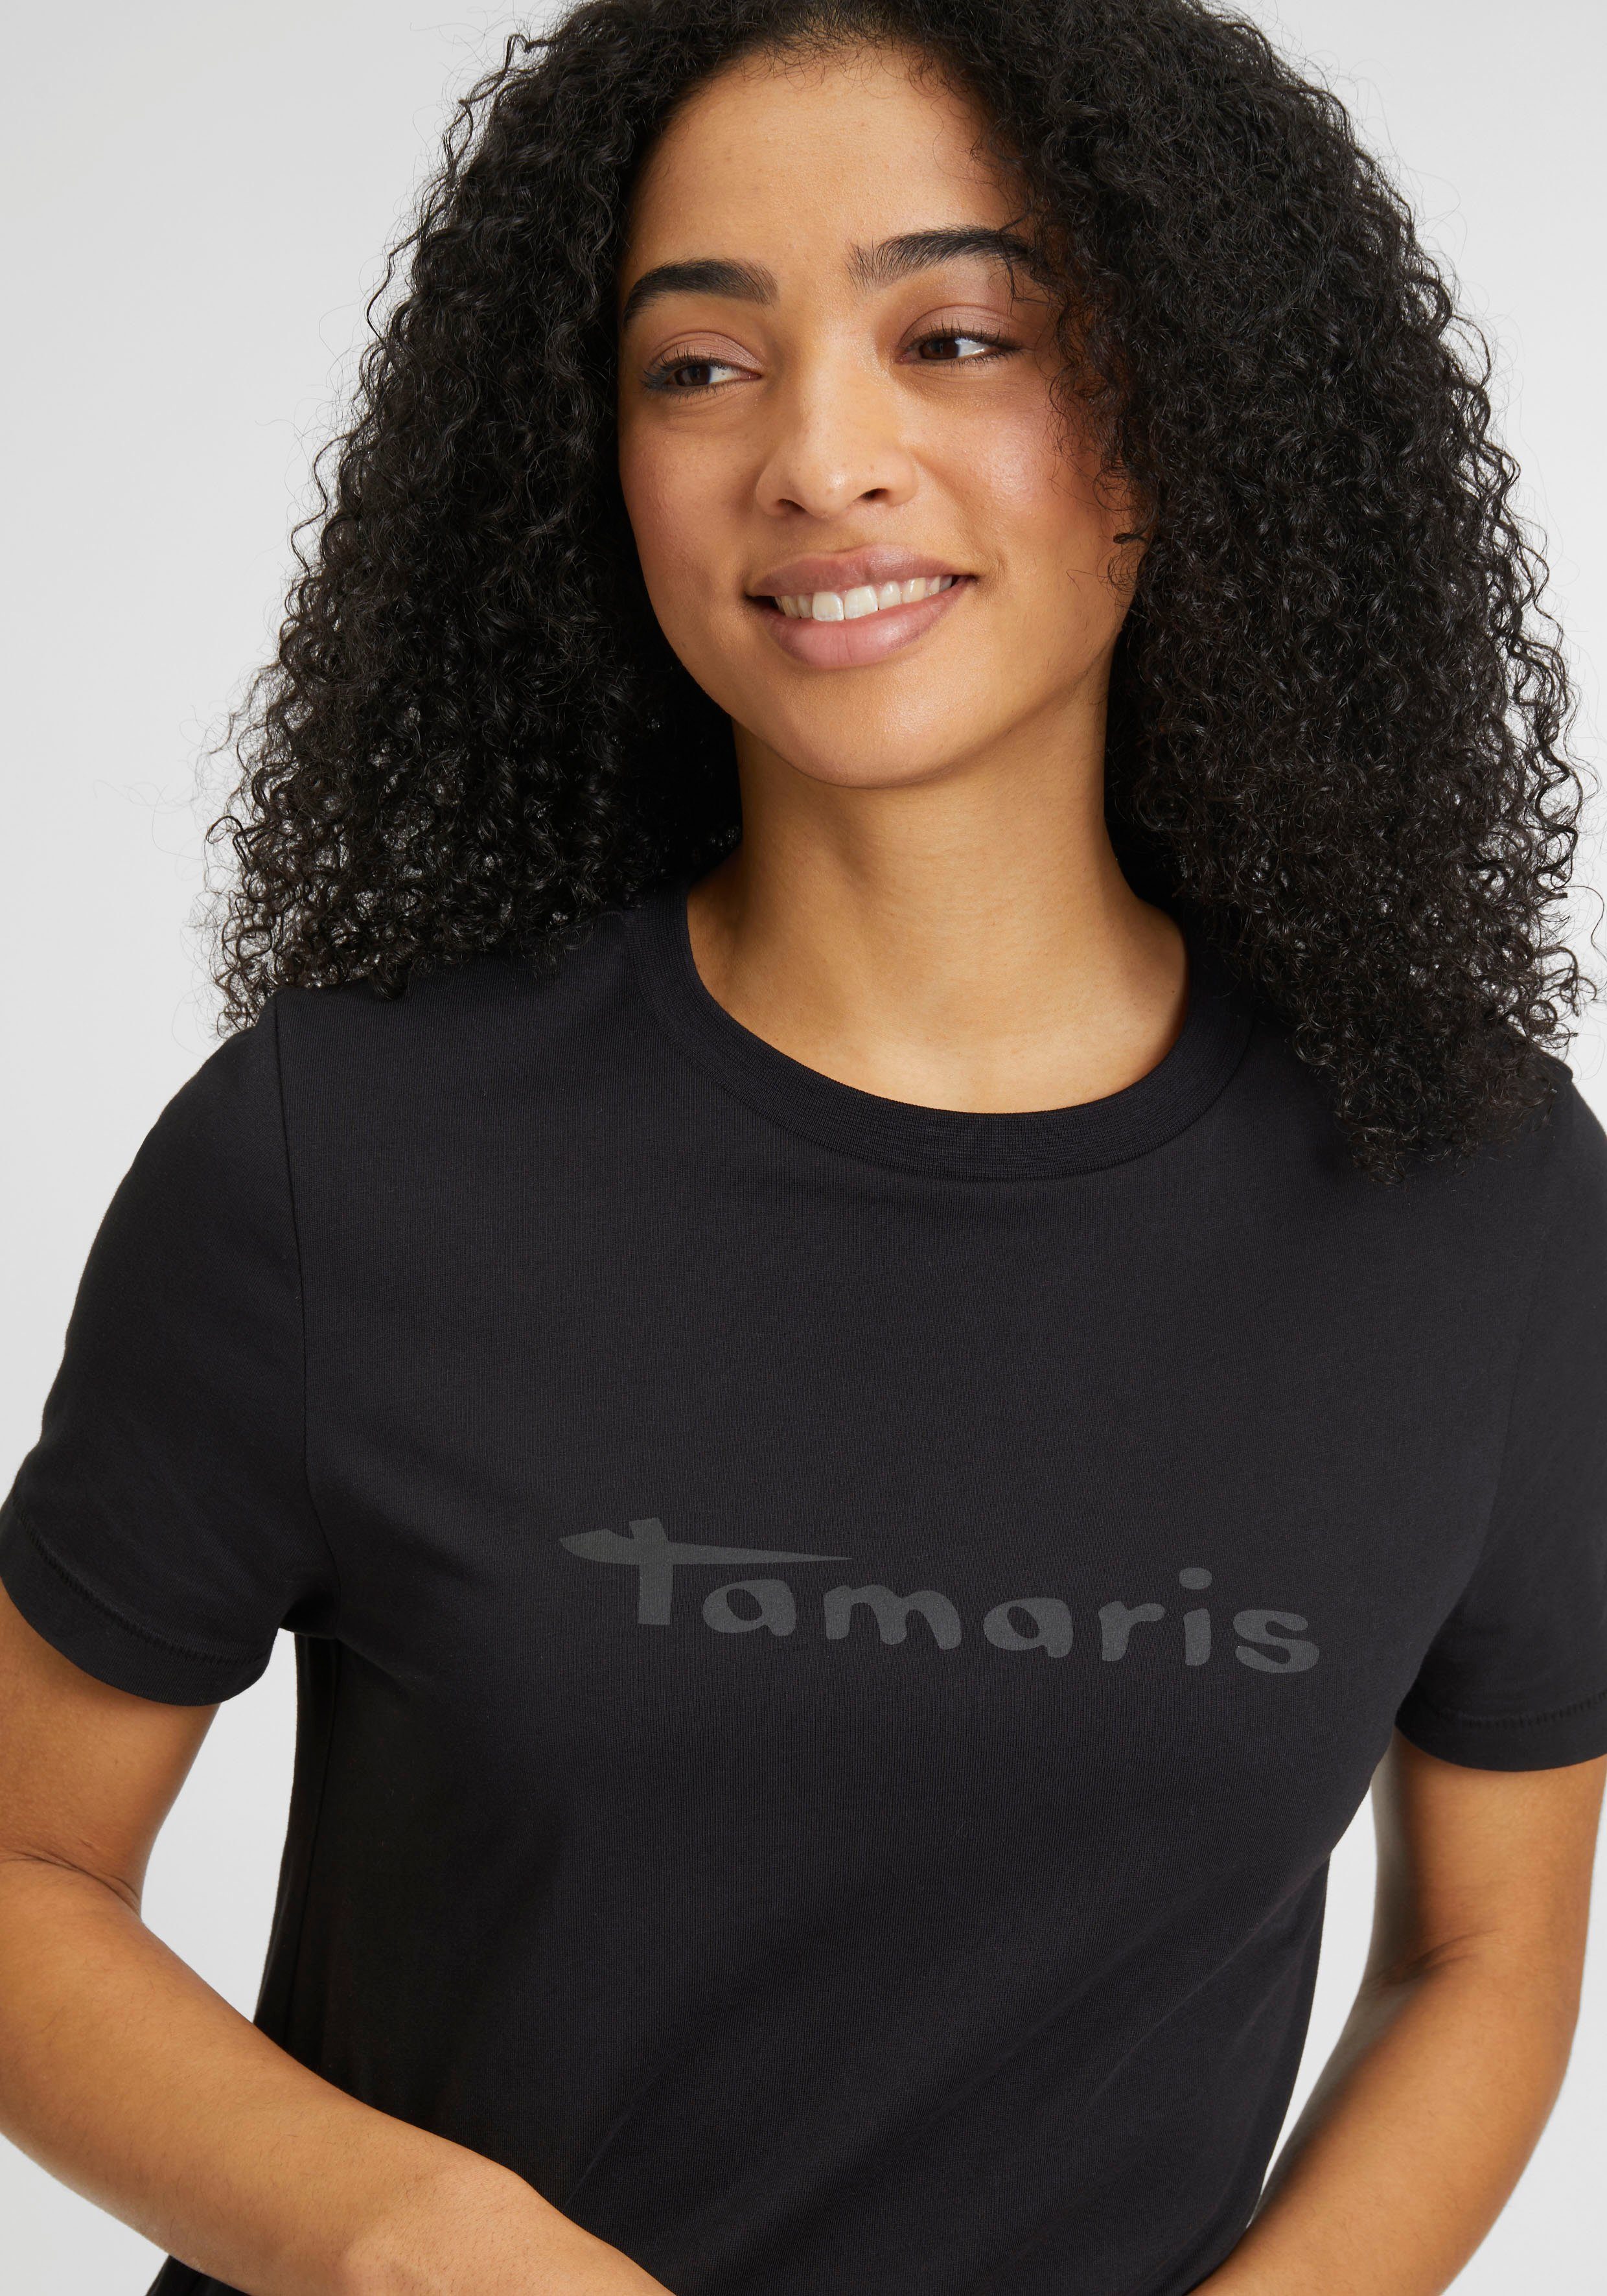 Tamaris T-Shirt mit Rundhalsausschnitt beauty black - NEUE KOLLEKTION